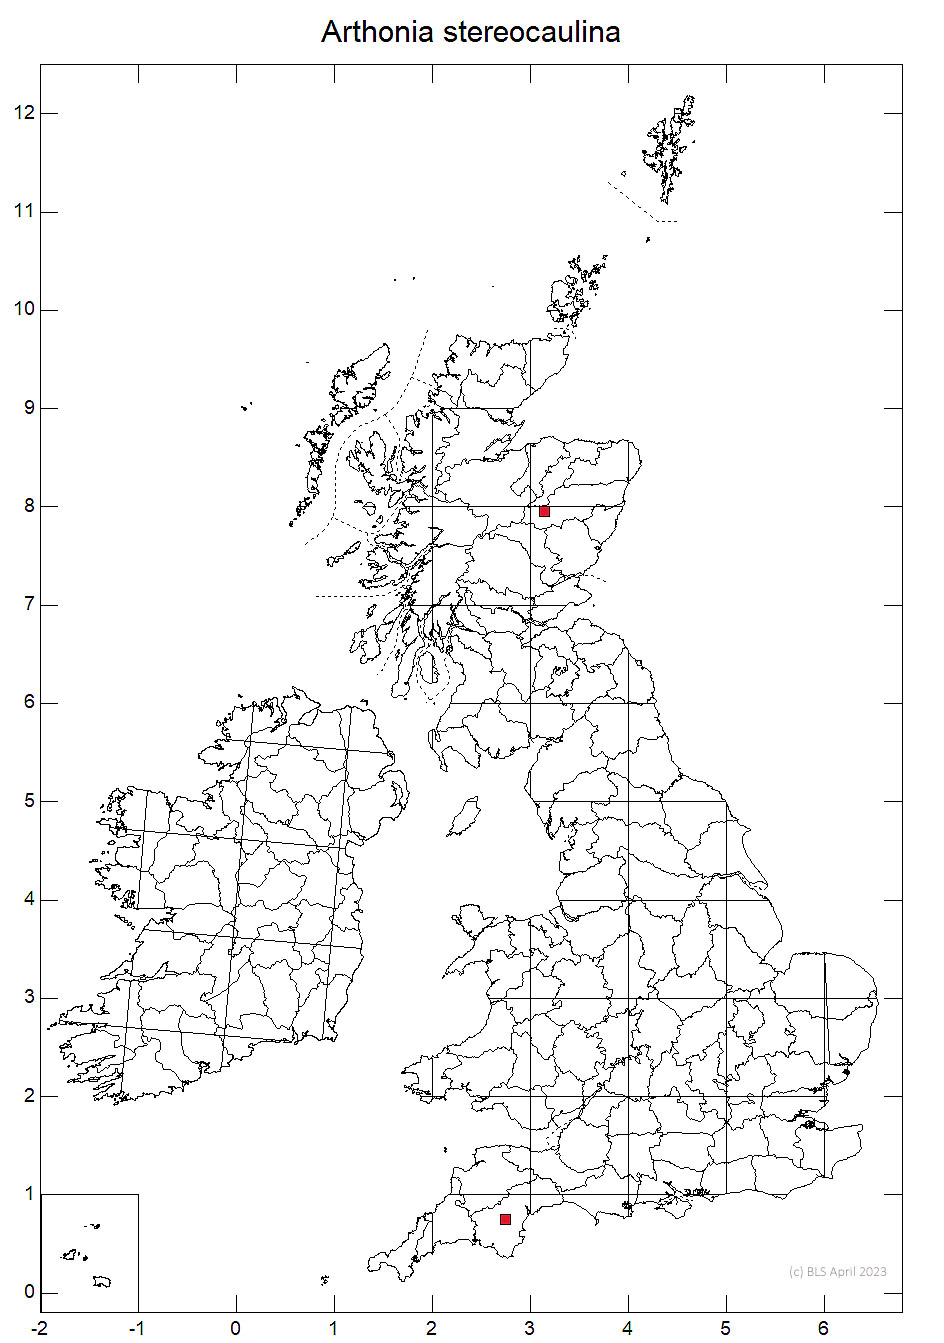 Arthonia stereocaulina 10km sq distribution map